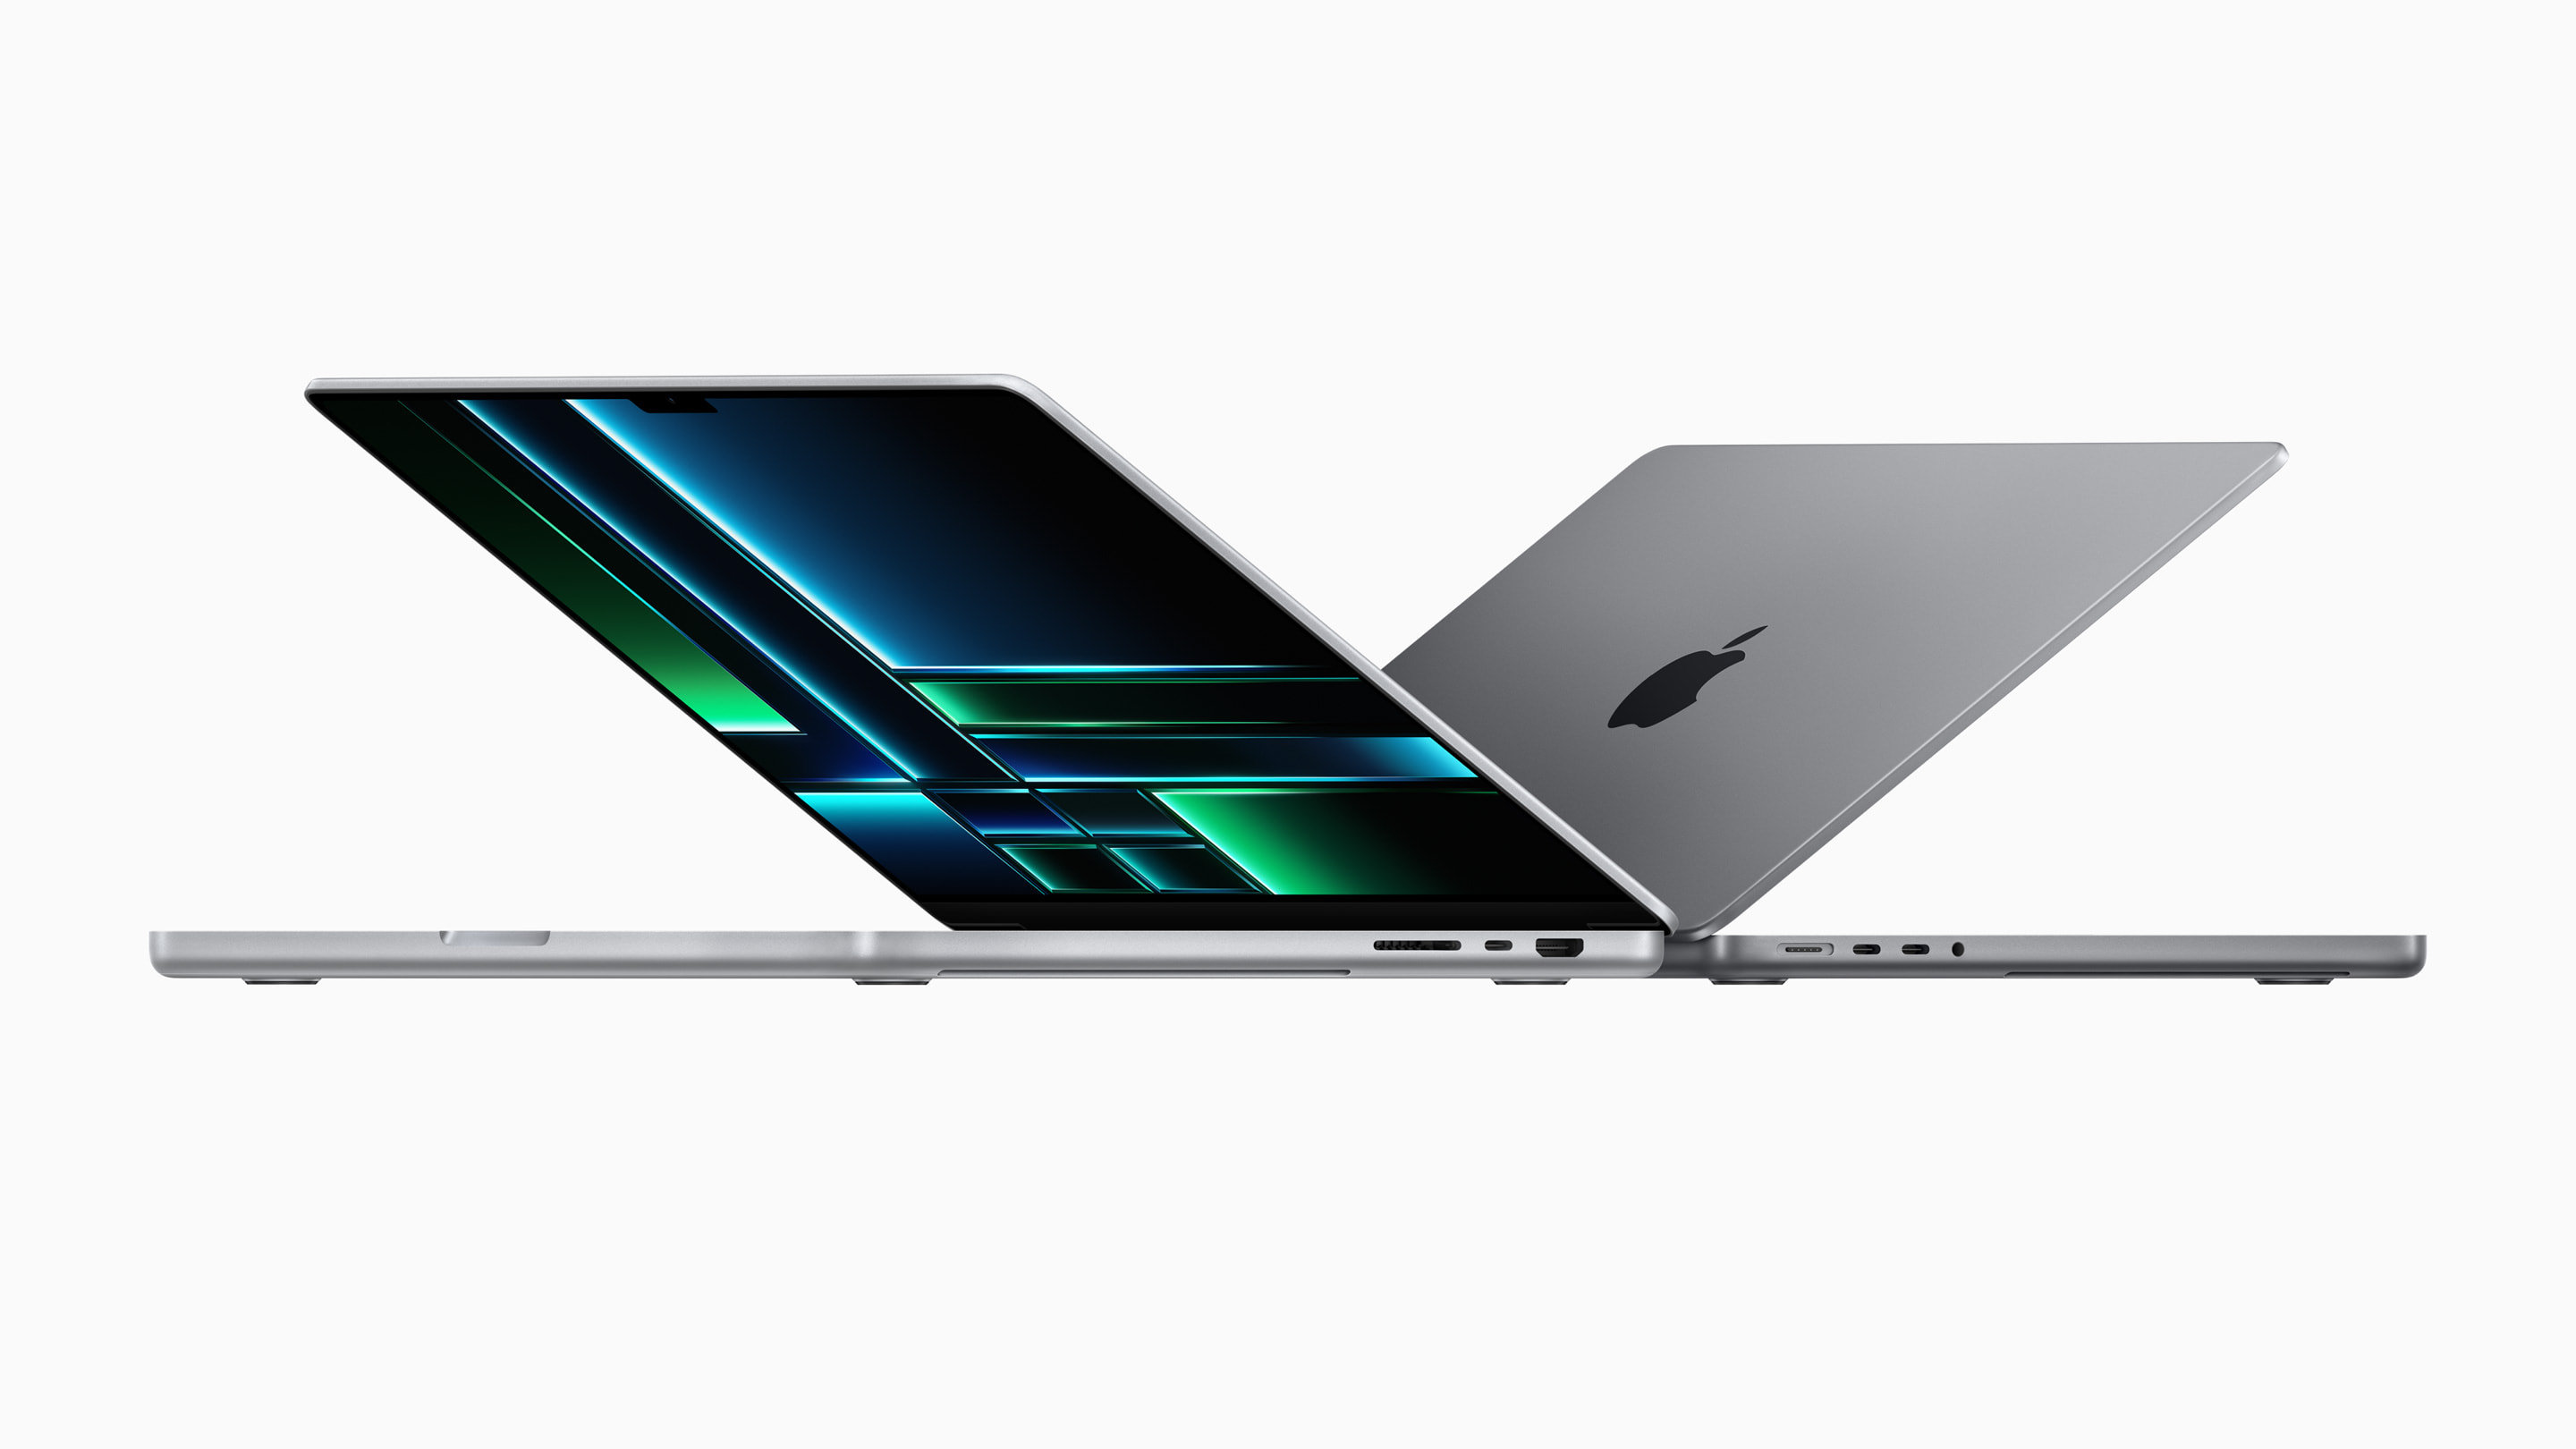 Apple Announces New MacBook Pros With M2 Pro and M2 Max Chips, Up to 96GB RAM, 8K HDMI, Wi-Fi 6E, and More